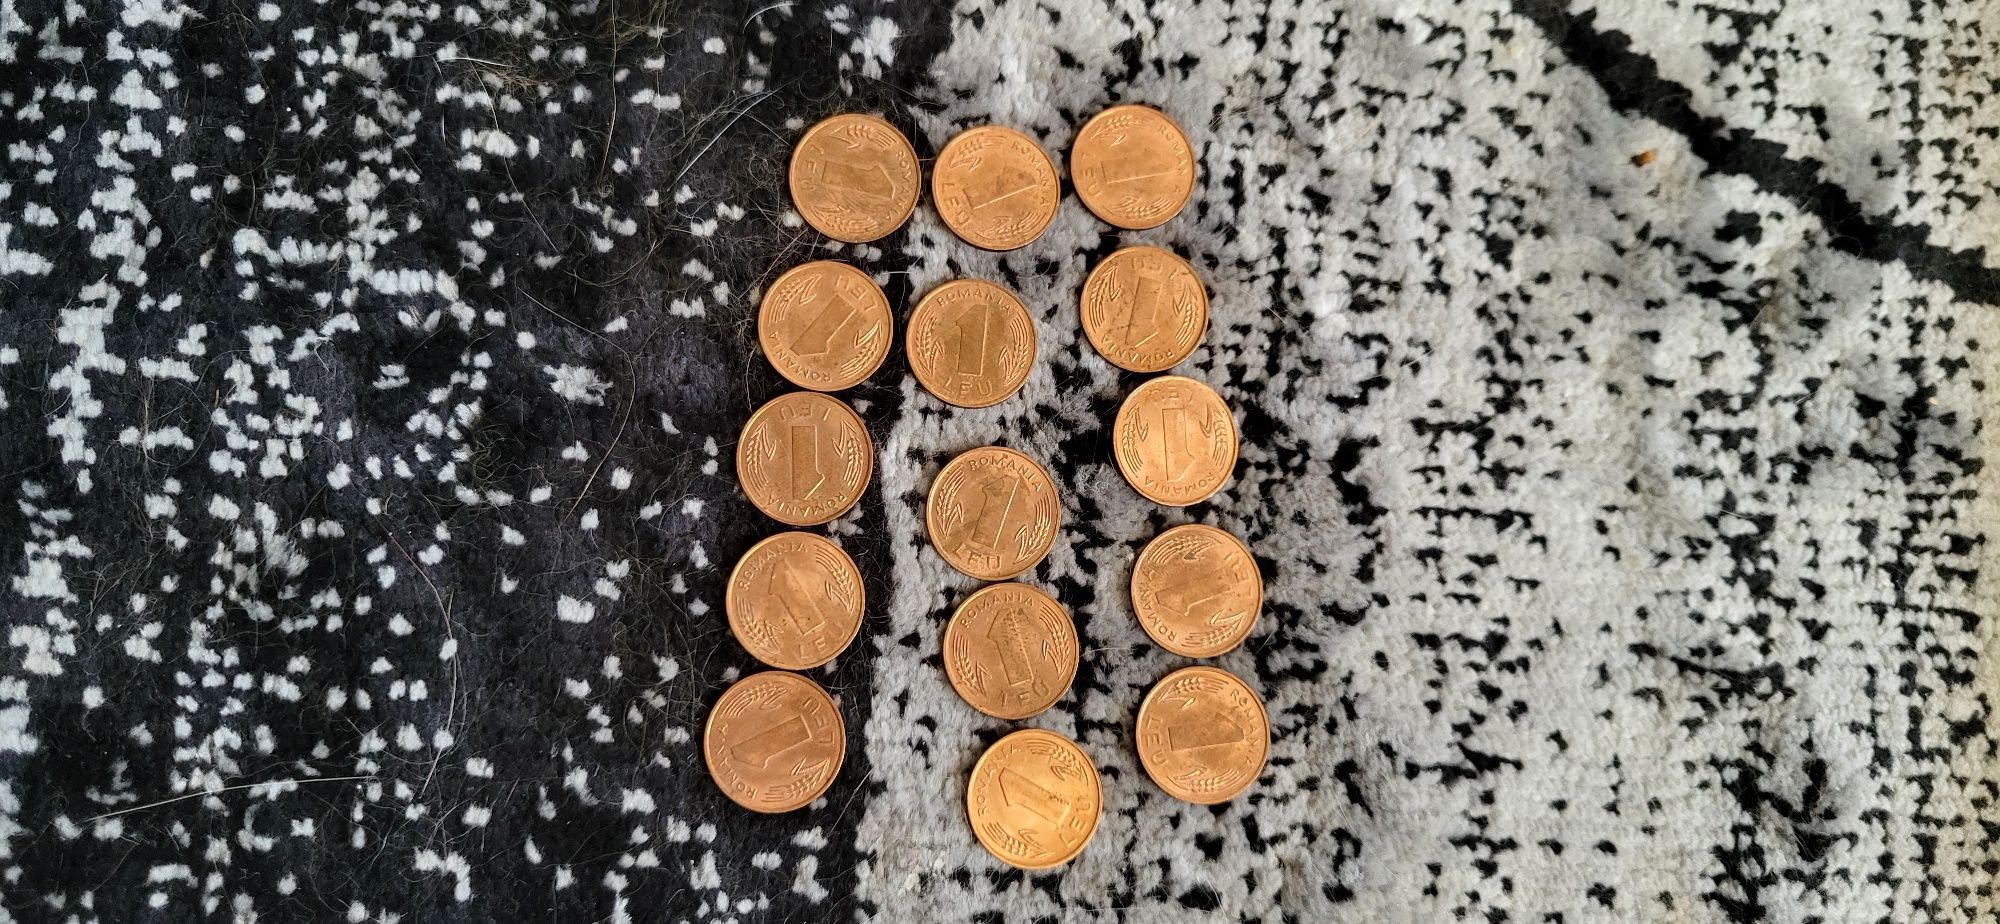 Monede romanesti 1 leu